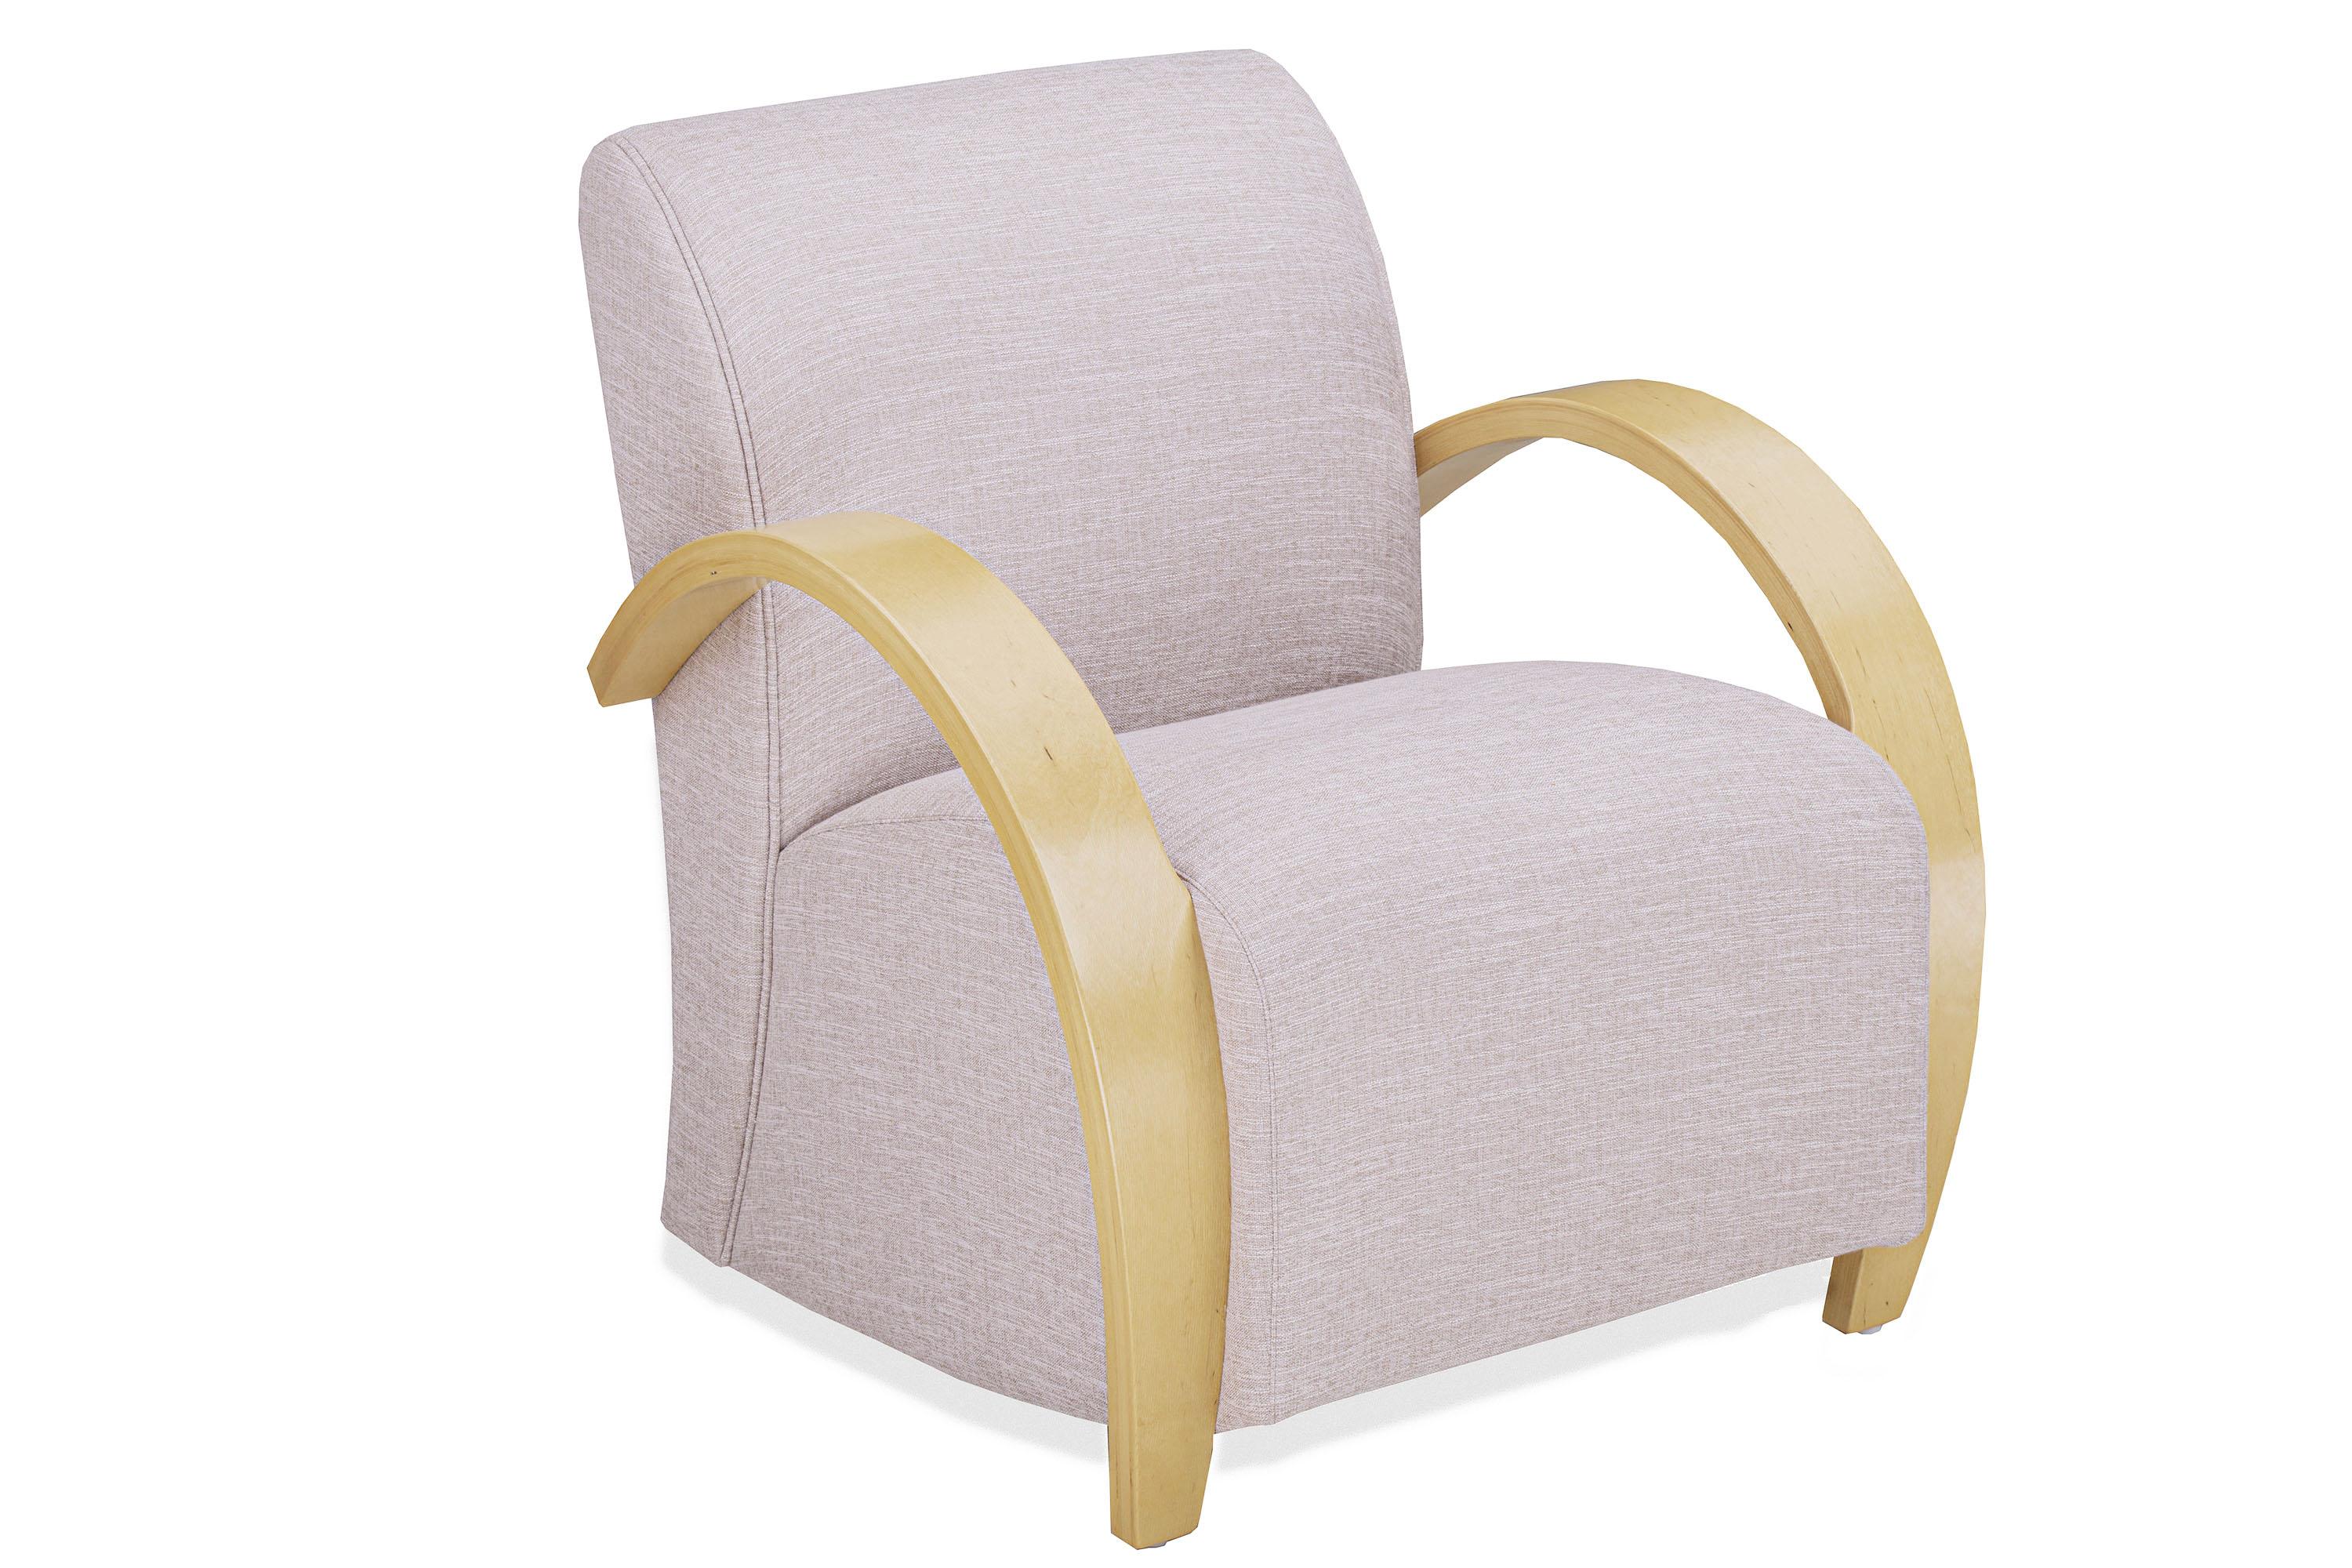 Фото №1 Паладин стандарт кресло рогожка Орион Роз